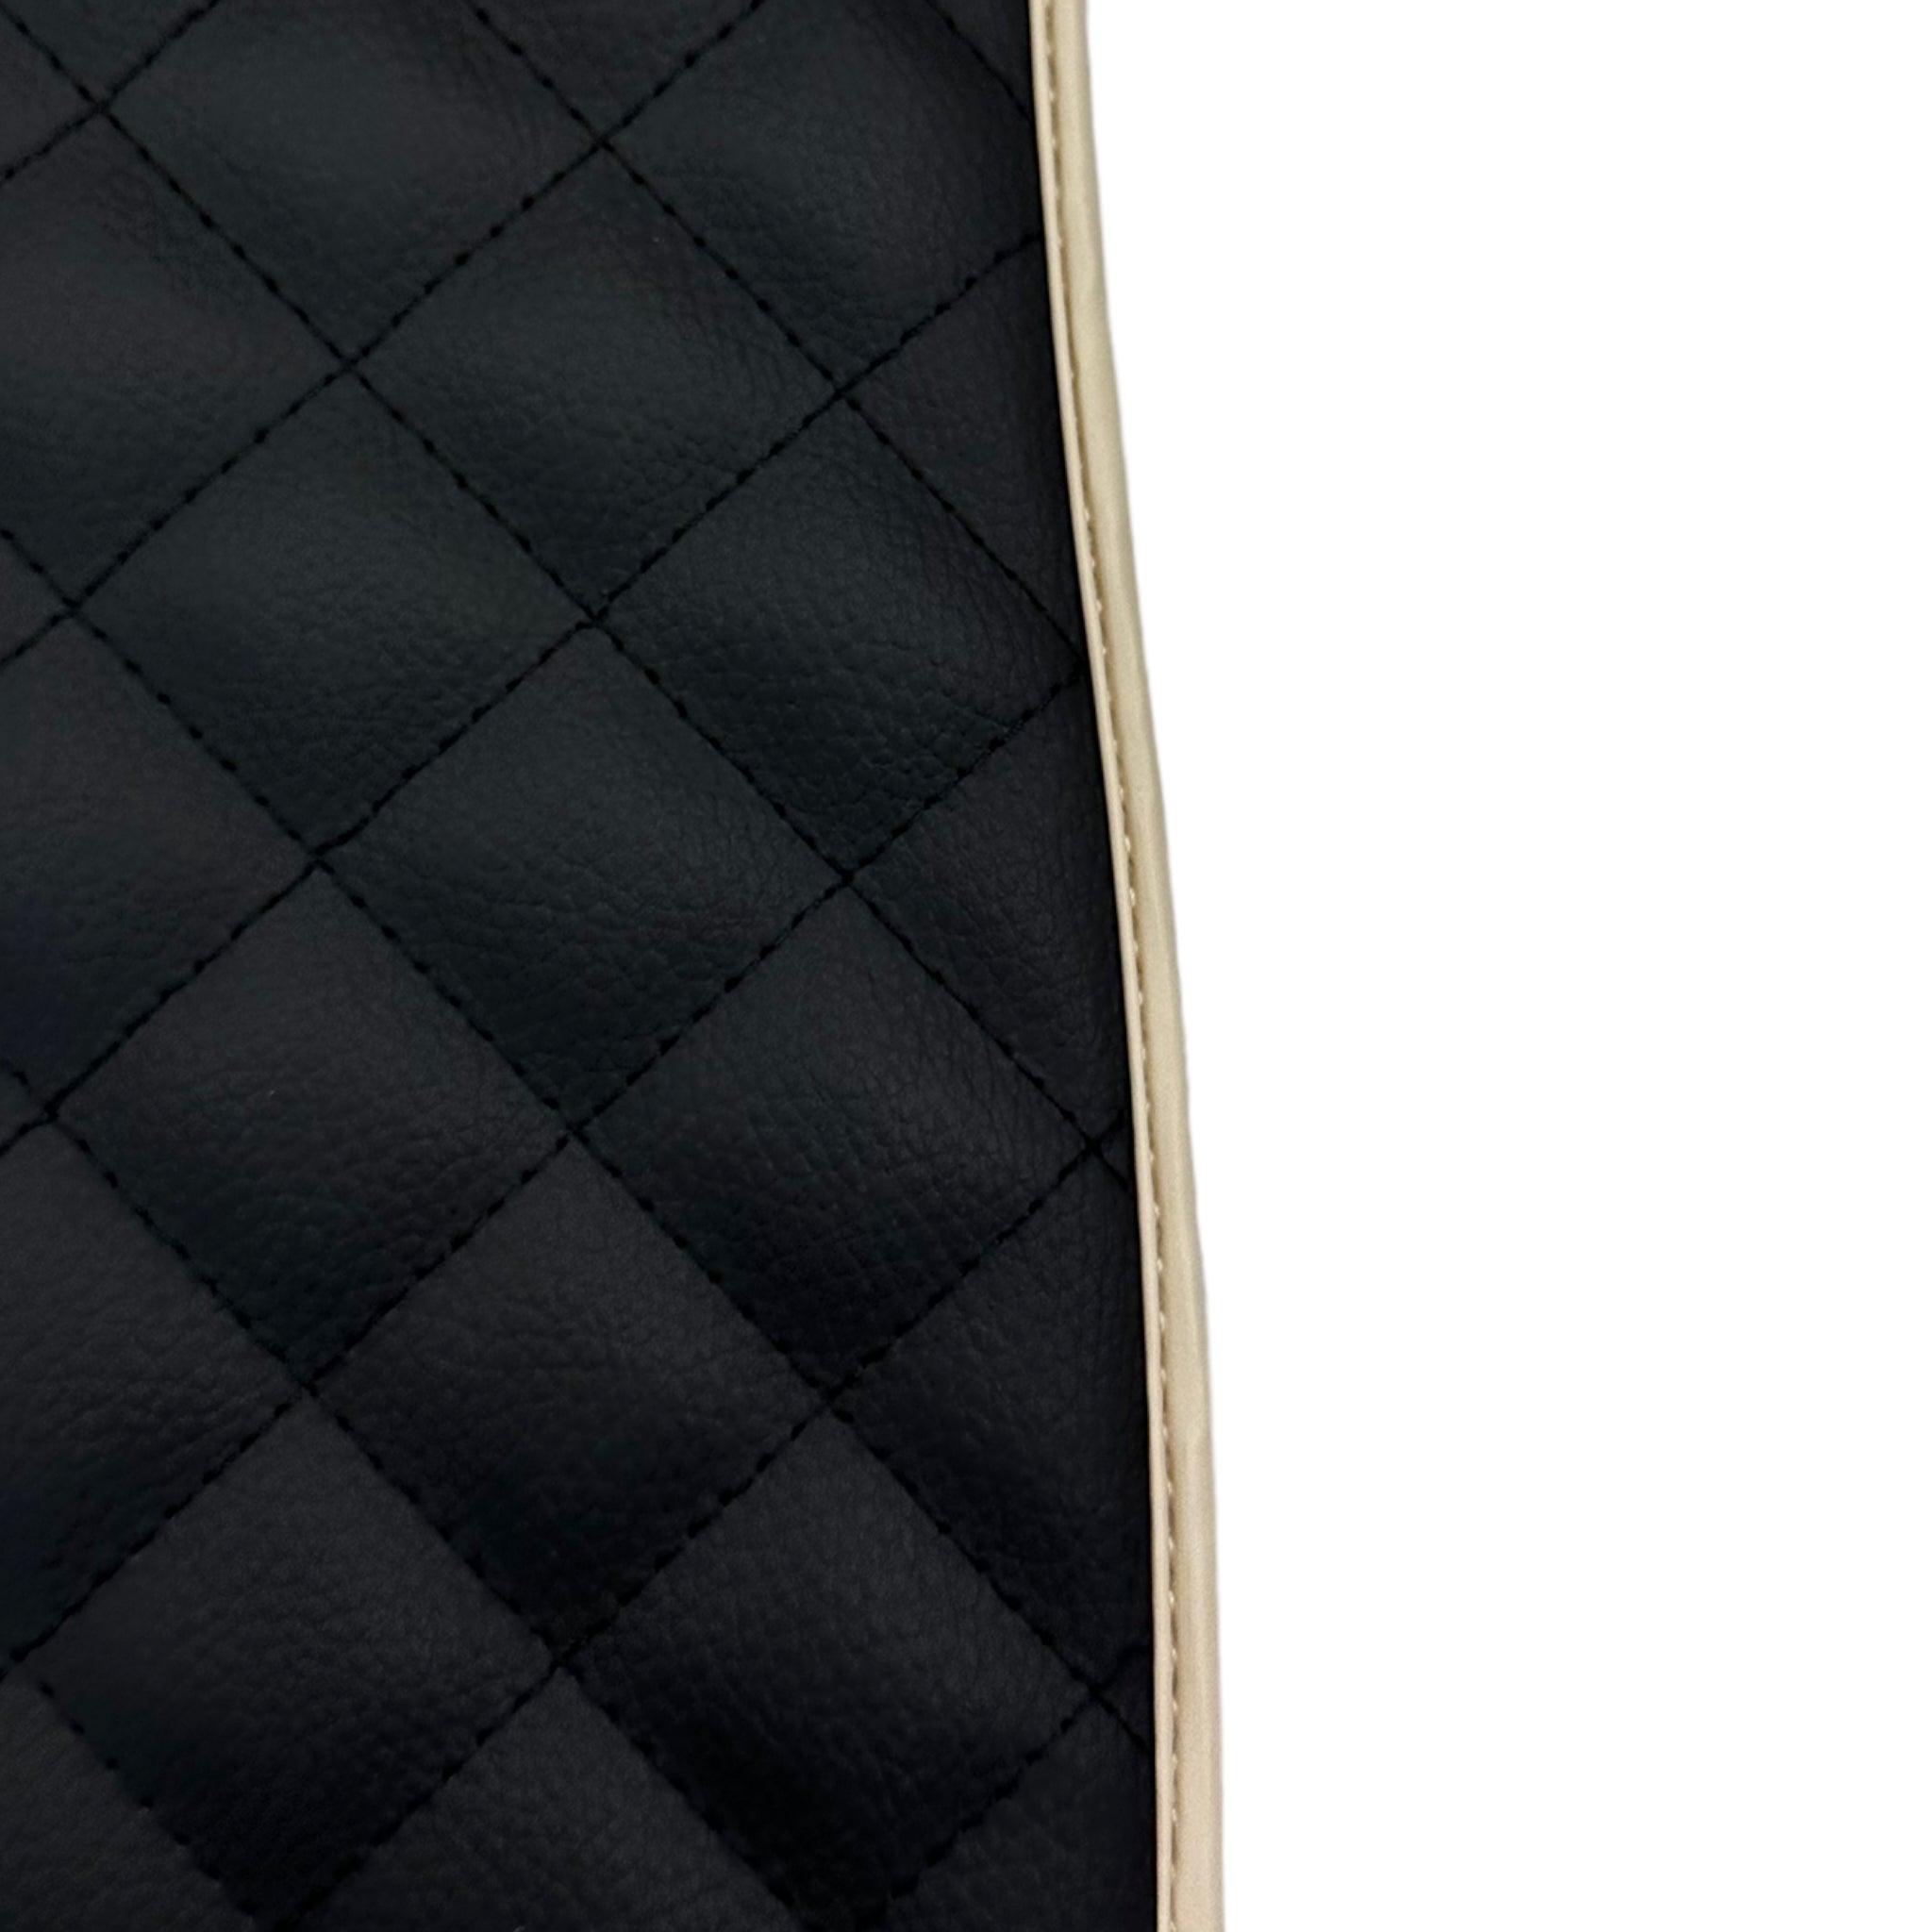 Leather Floor Mats for Ferrari California T (2008-2014) Black Sewing ER56 Design | Beige Trim